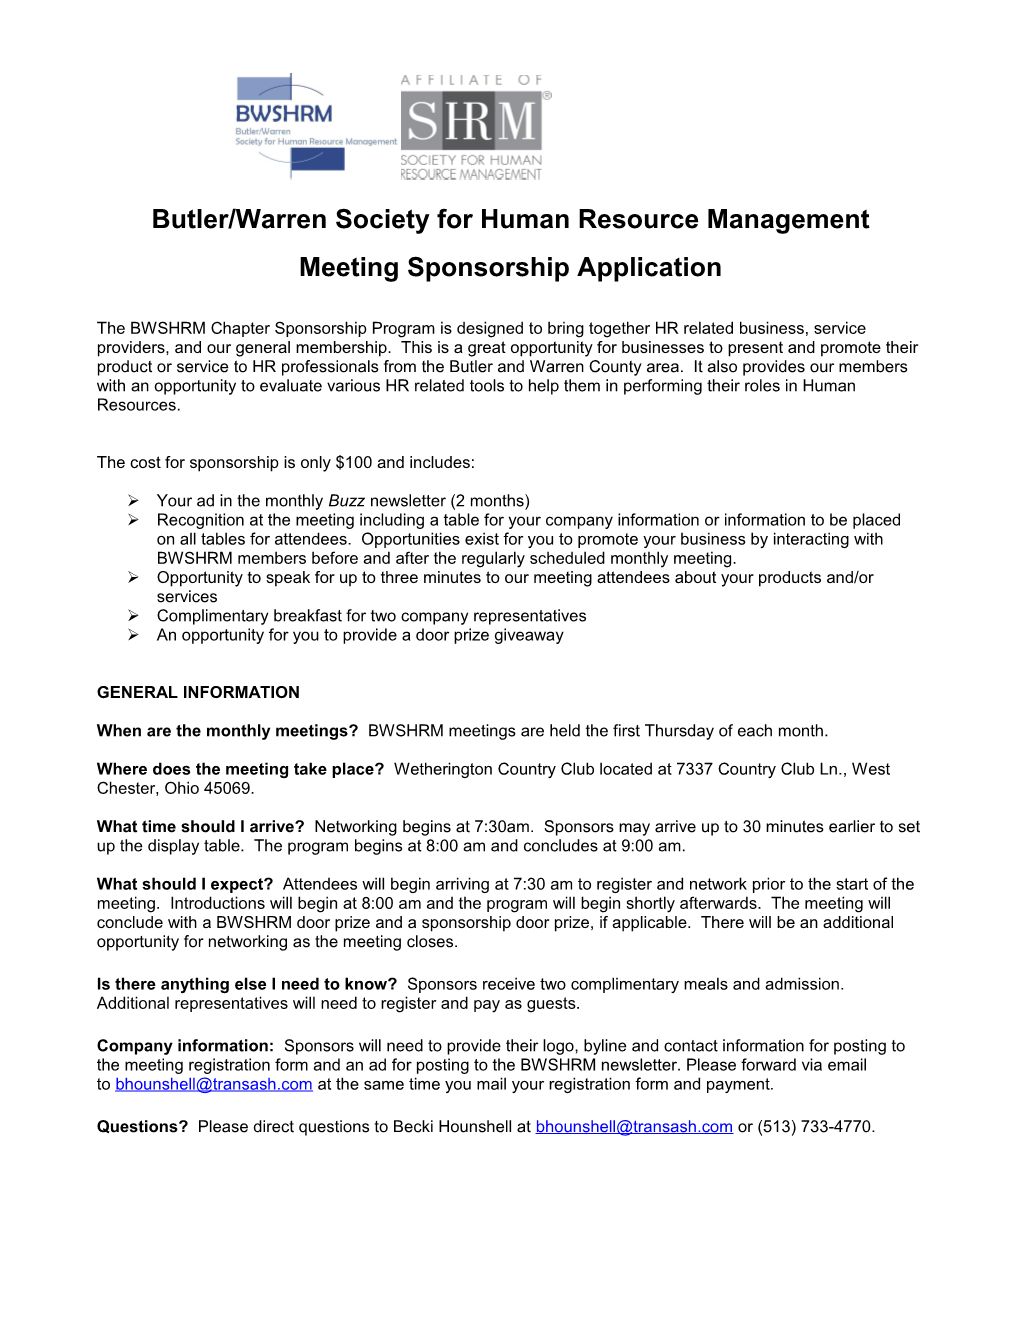 Butler Warren Society for Human Resource Management